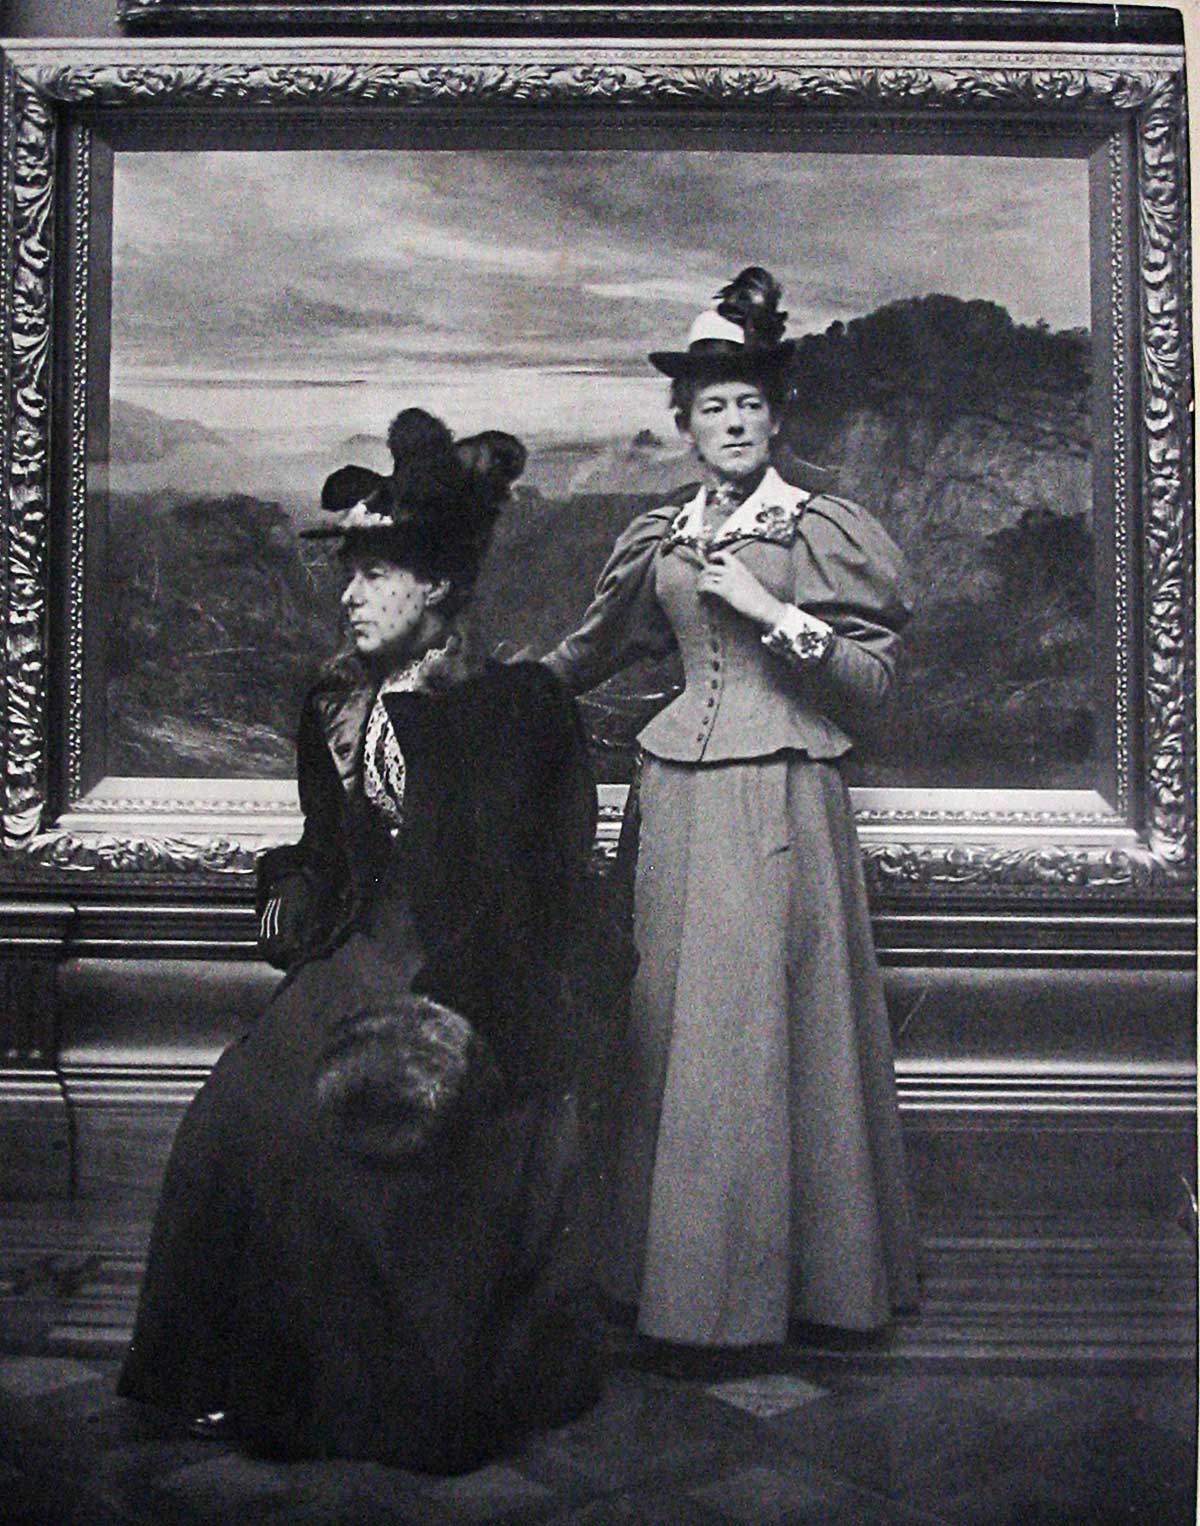 Two unknown ladies circa 1900